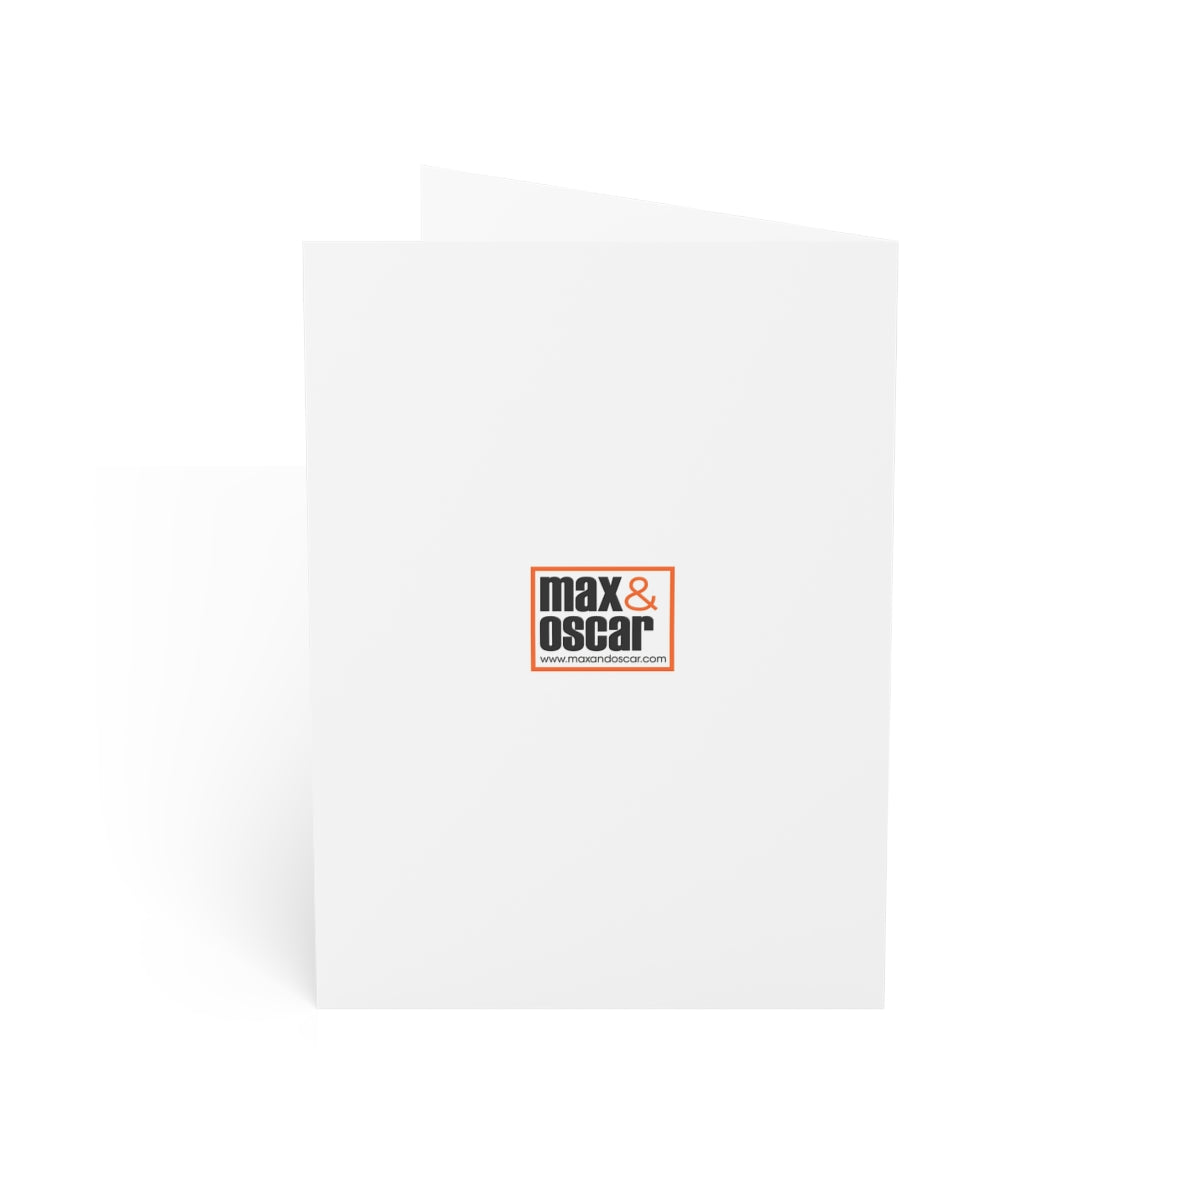 Arches National Park Folded Matte Notecards + Envelopes (10pcs)